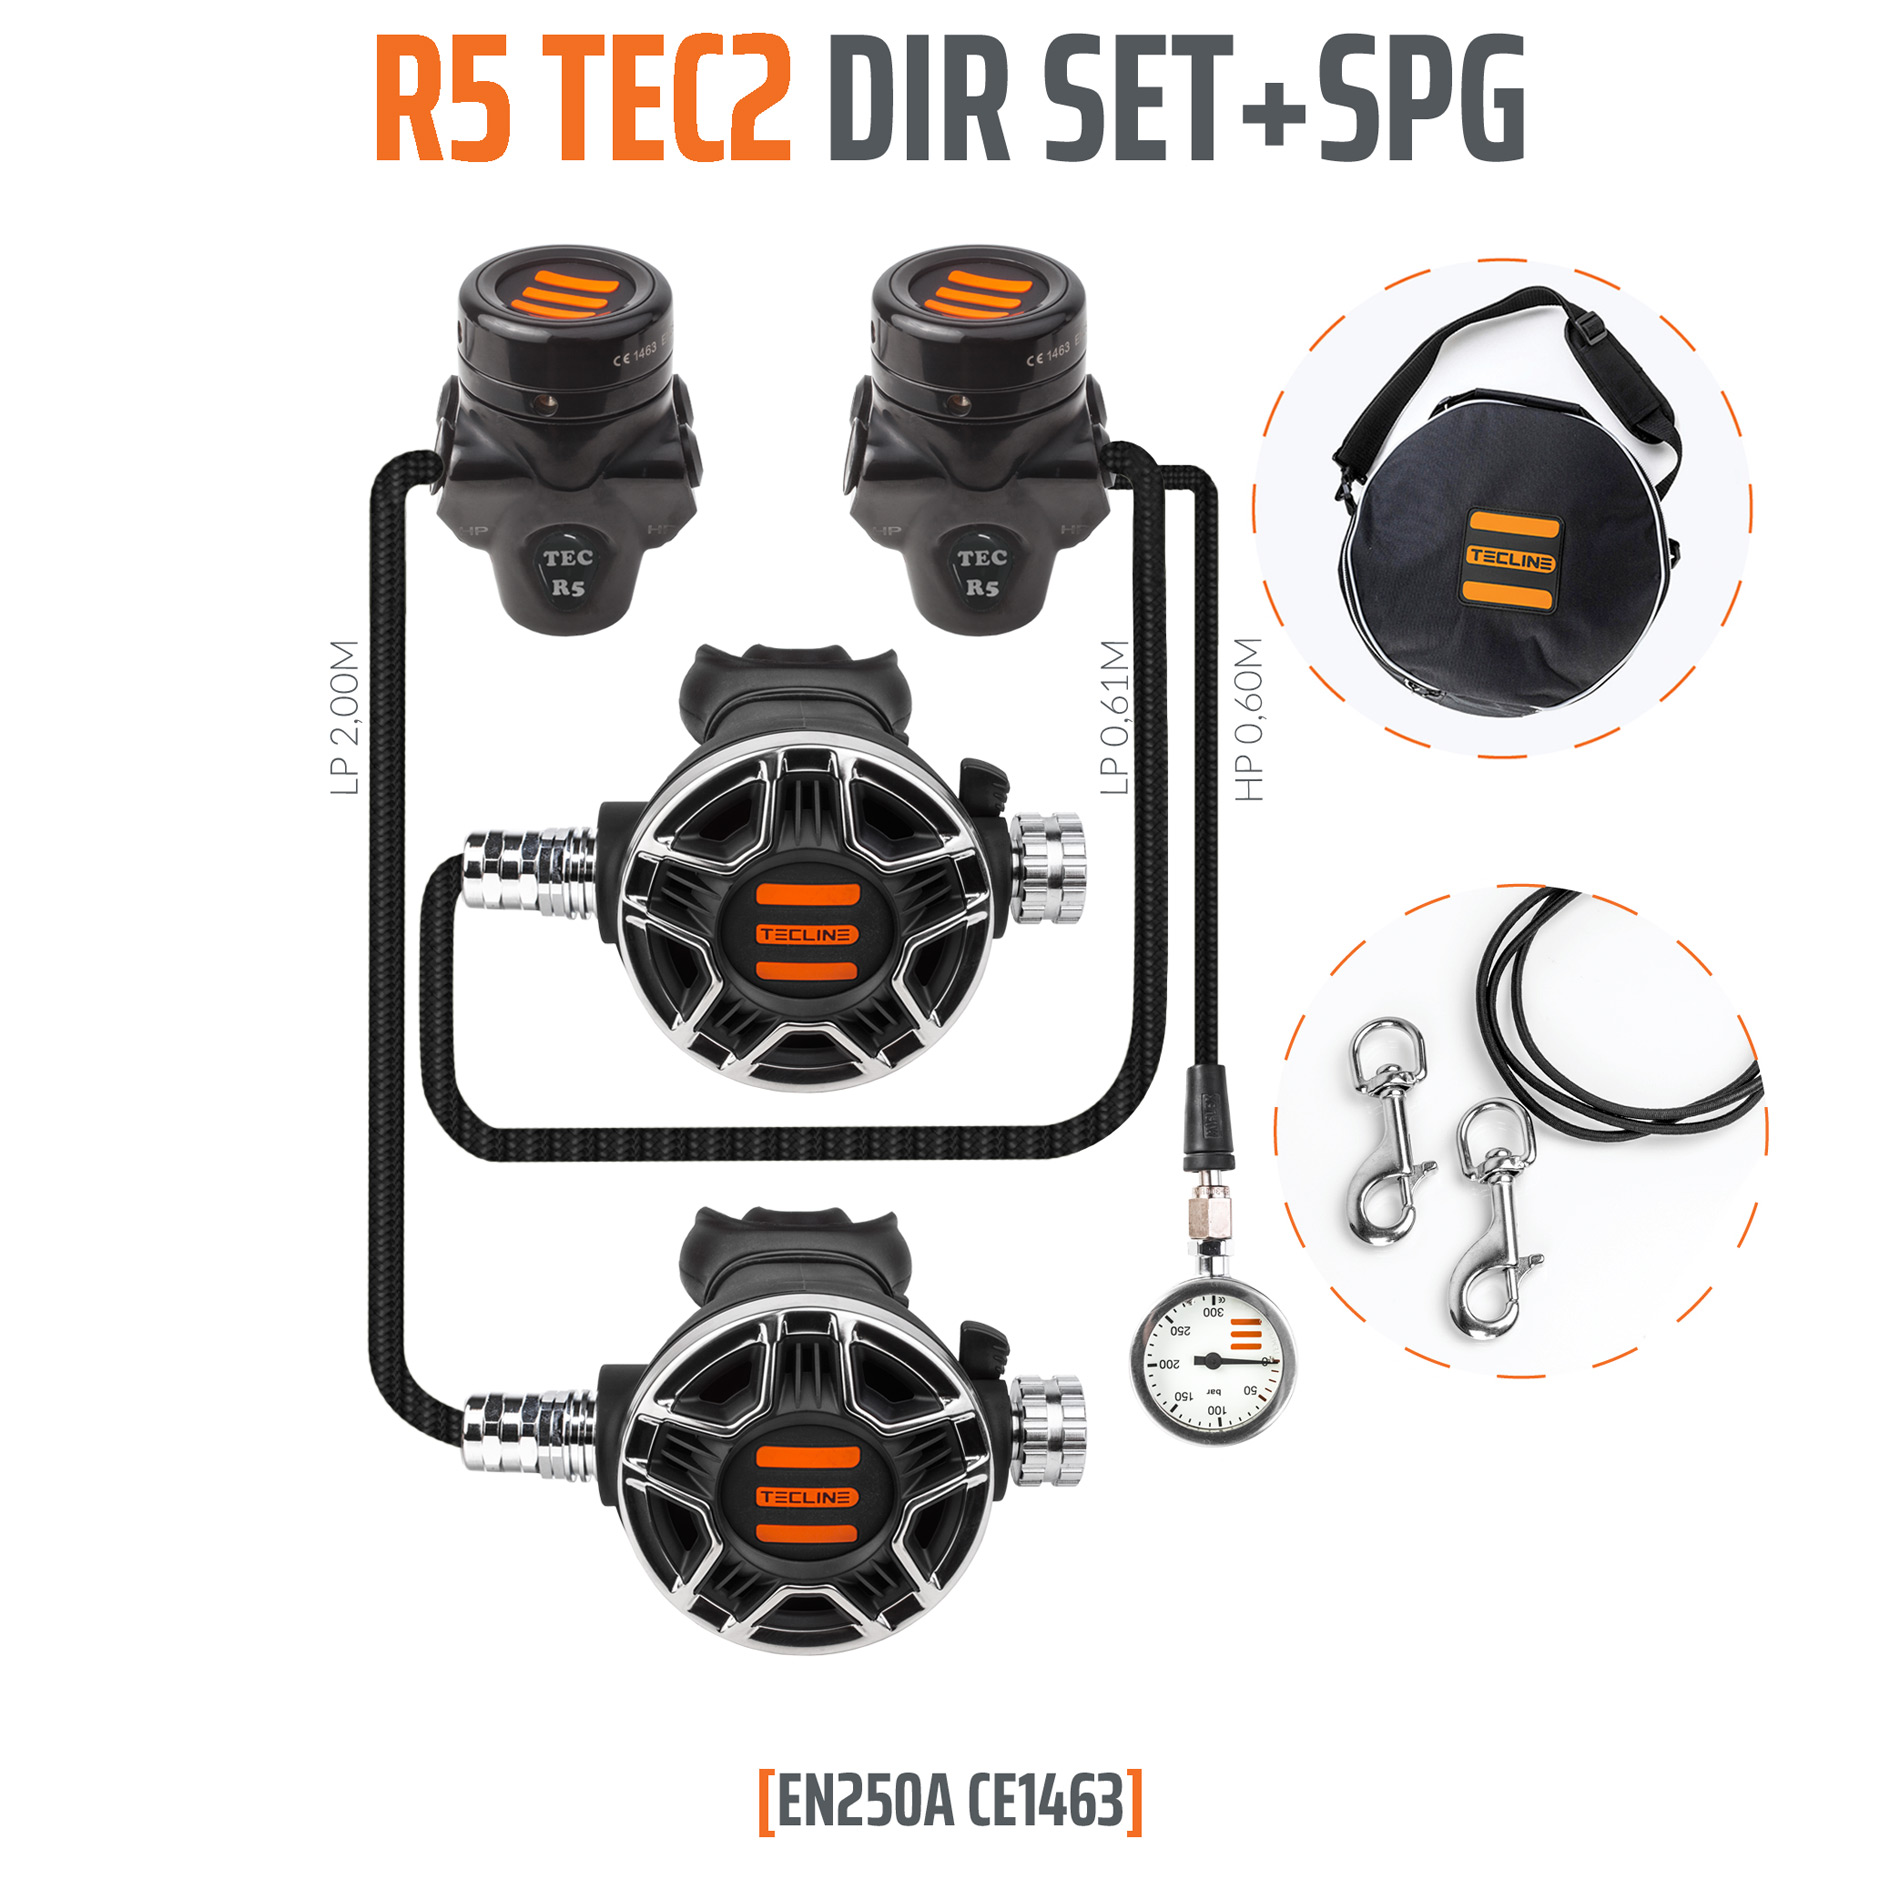 Tecline Regulator R5 TEC2 DIR Set with SPG – EN250A